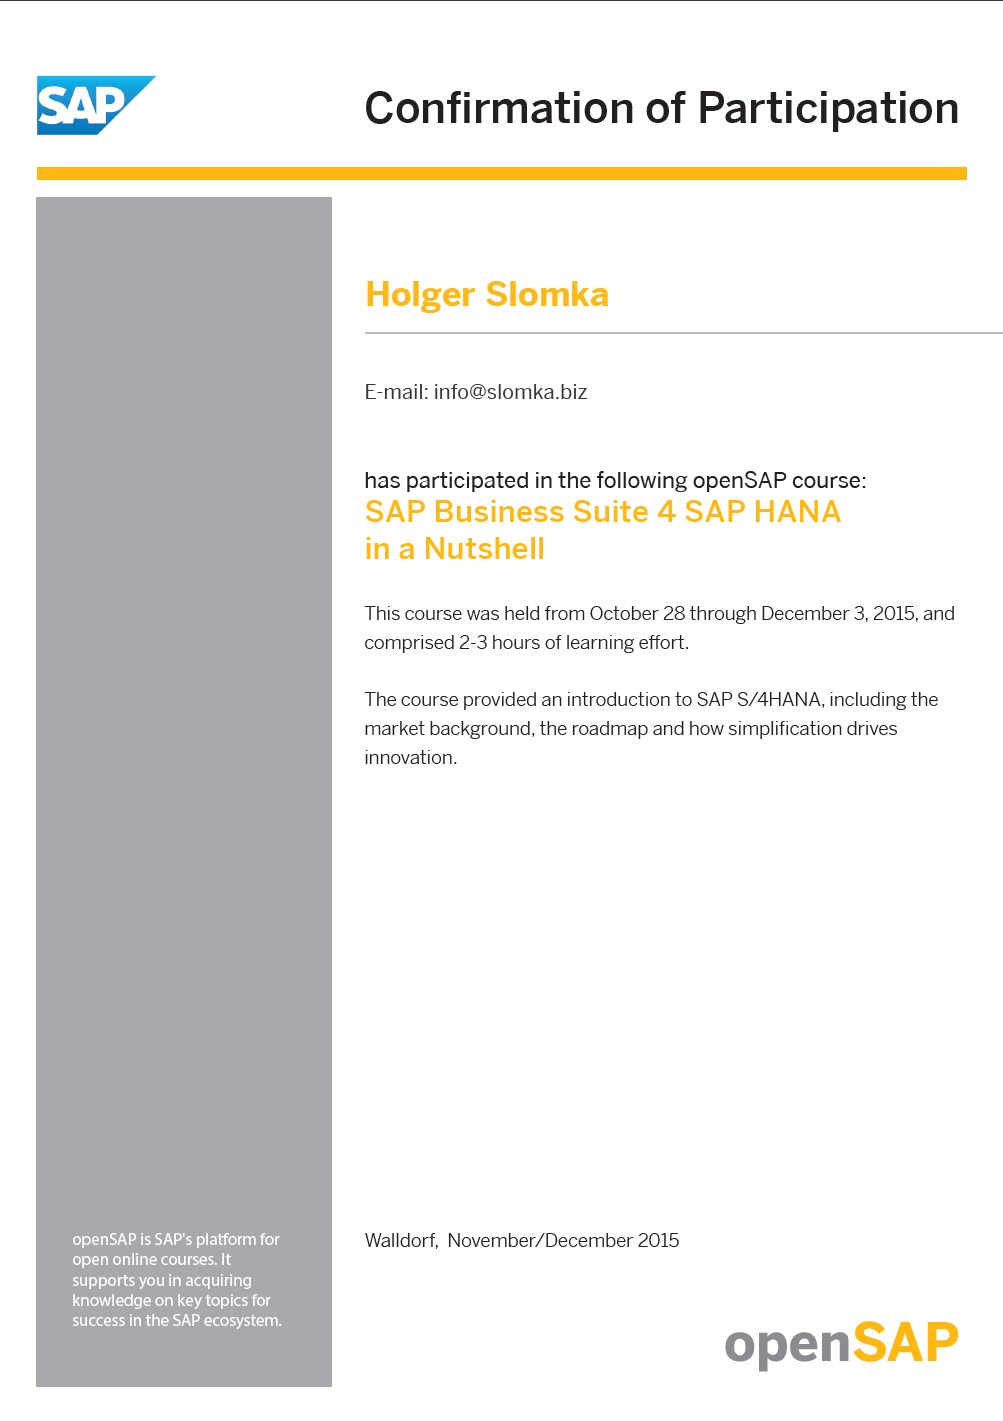 OpenSAP - SAP® Business Suite 4 SAP® HANA in a Nutshell -
														preview of Teilnahmebestätigung